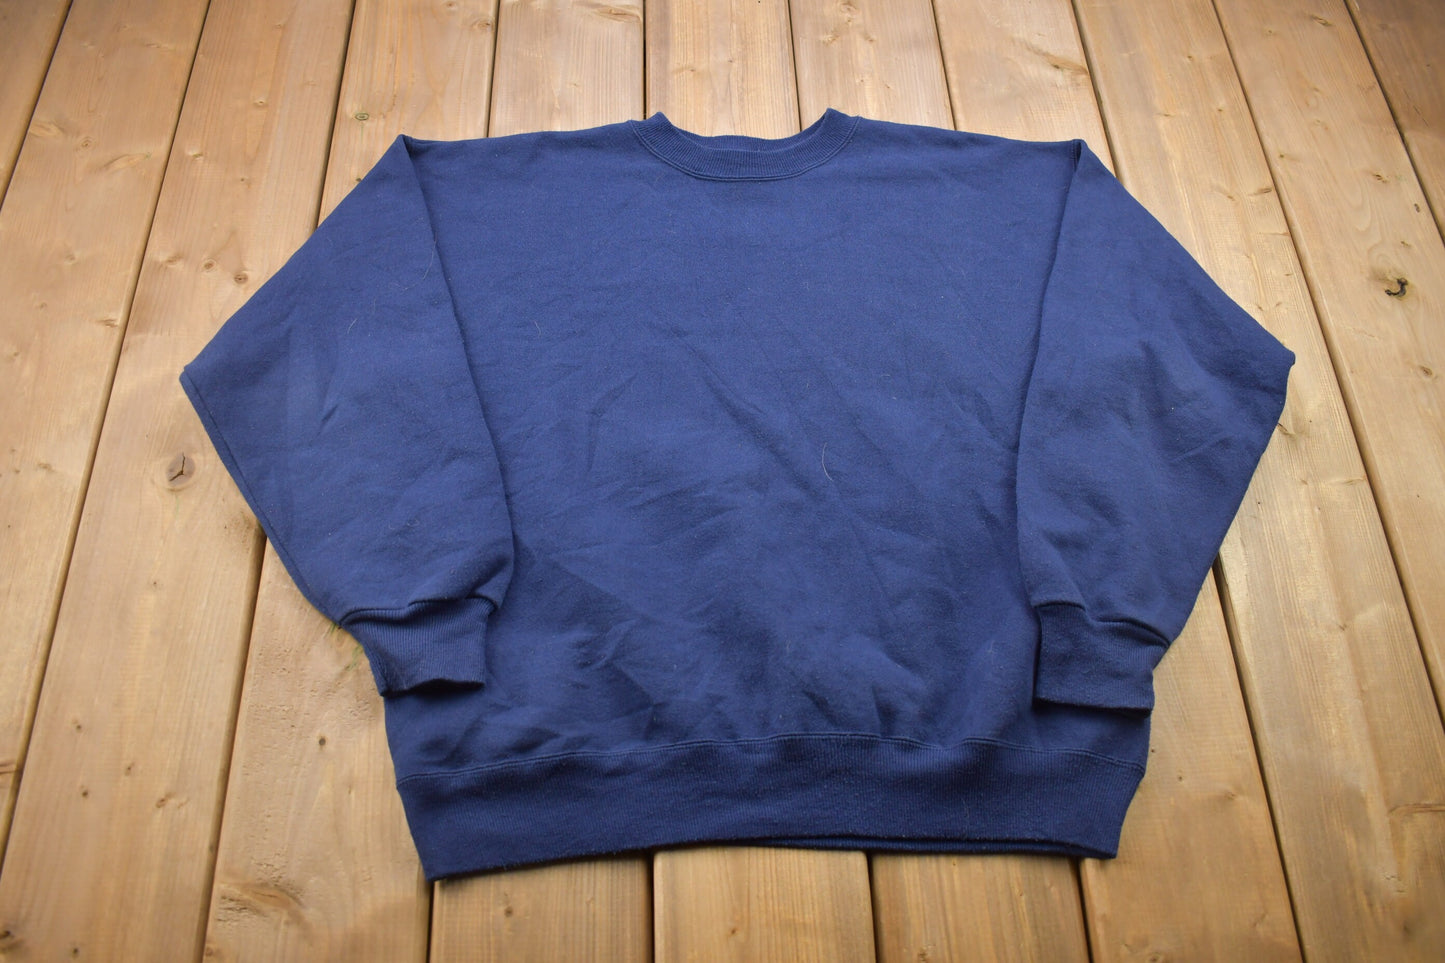 Vintage 1990s Blank Basic Crewneck Sweatshirt / Made in USA / 90s Crewneck / Unbranded / Athleisure / Streetwear / Vintage Essentials